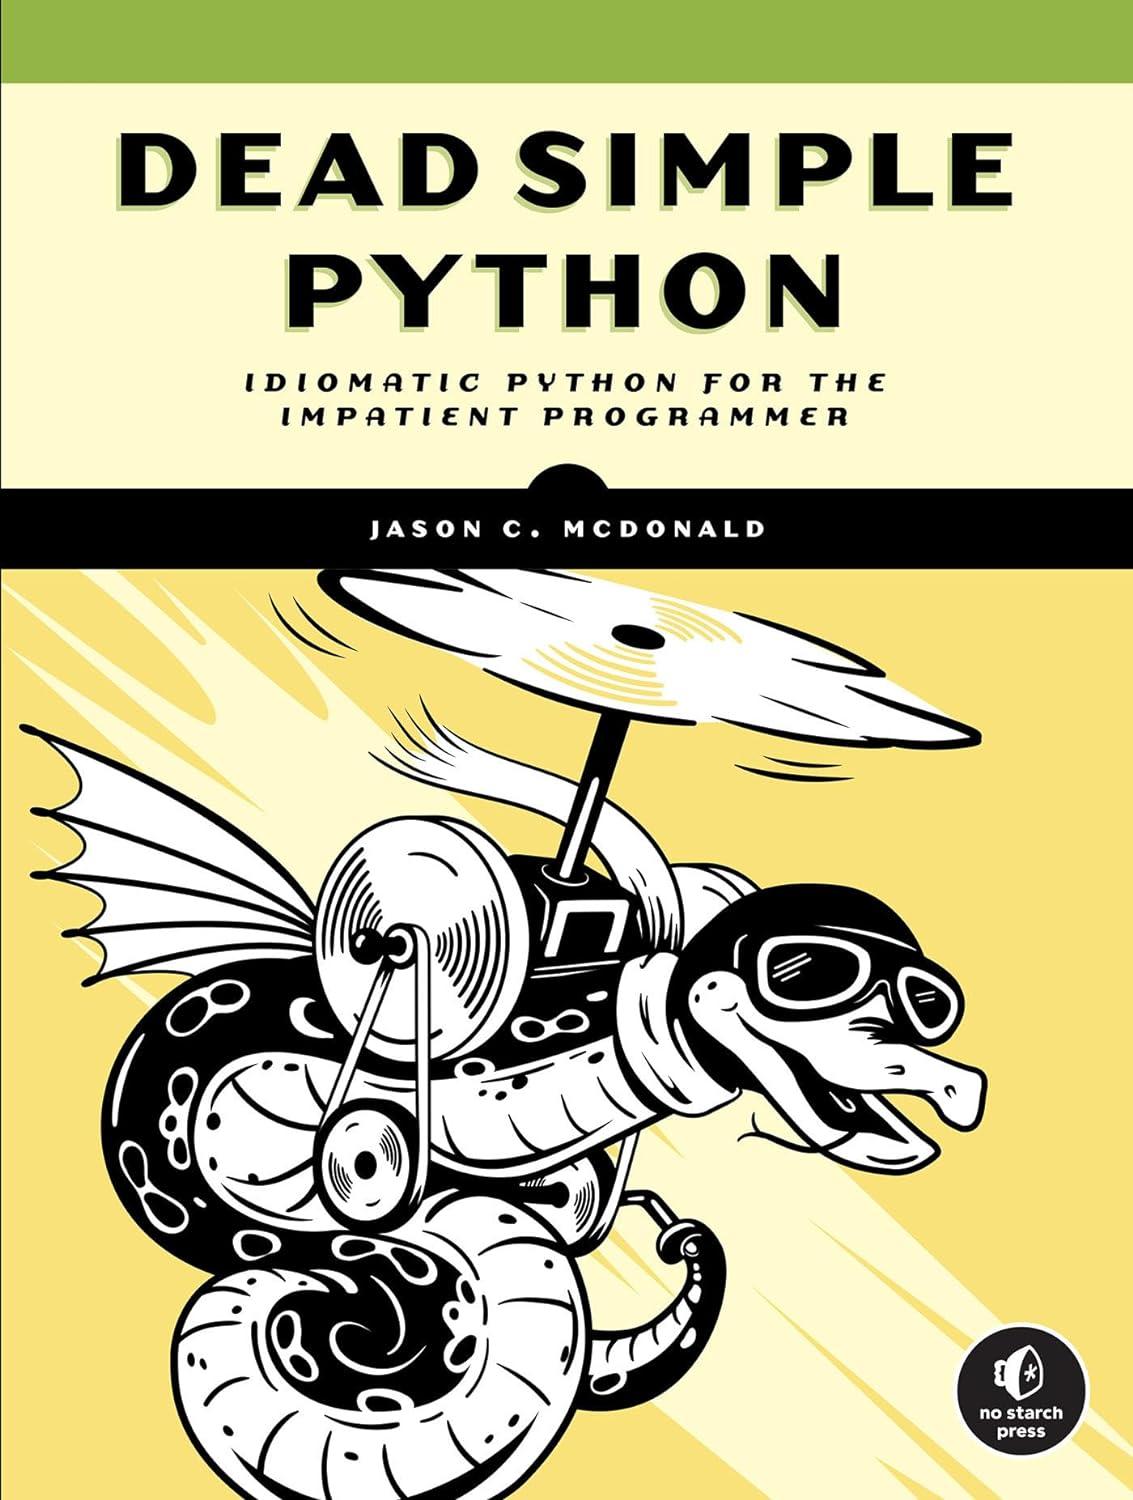 dead simple python idiomatic python for the impatient programmer 1st edition jason c mcdonald 1718500920,